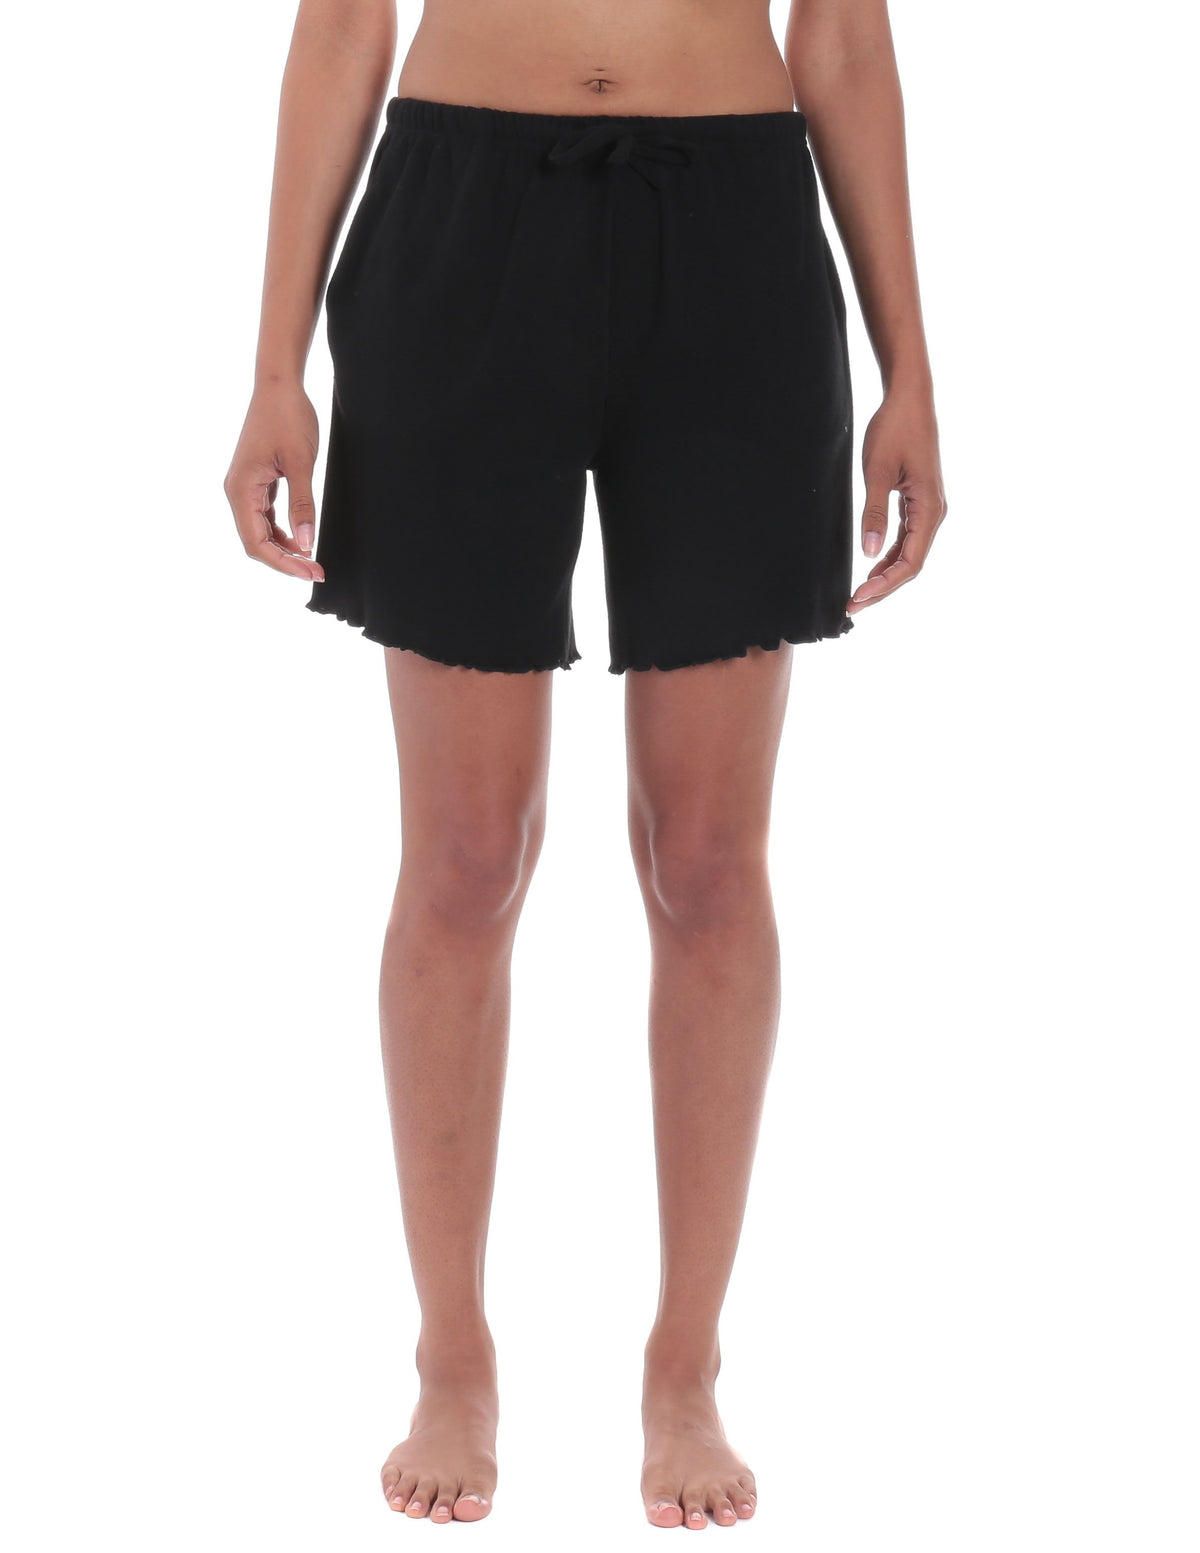 Women's Cozy Rib Lounge Shorts - 2 Pack - Black/Black